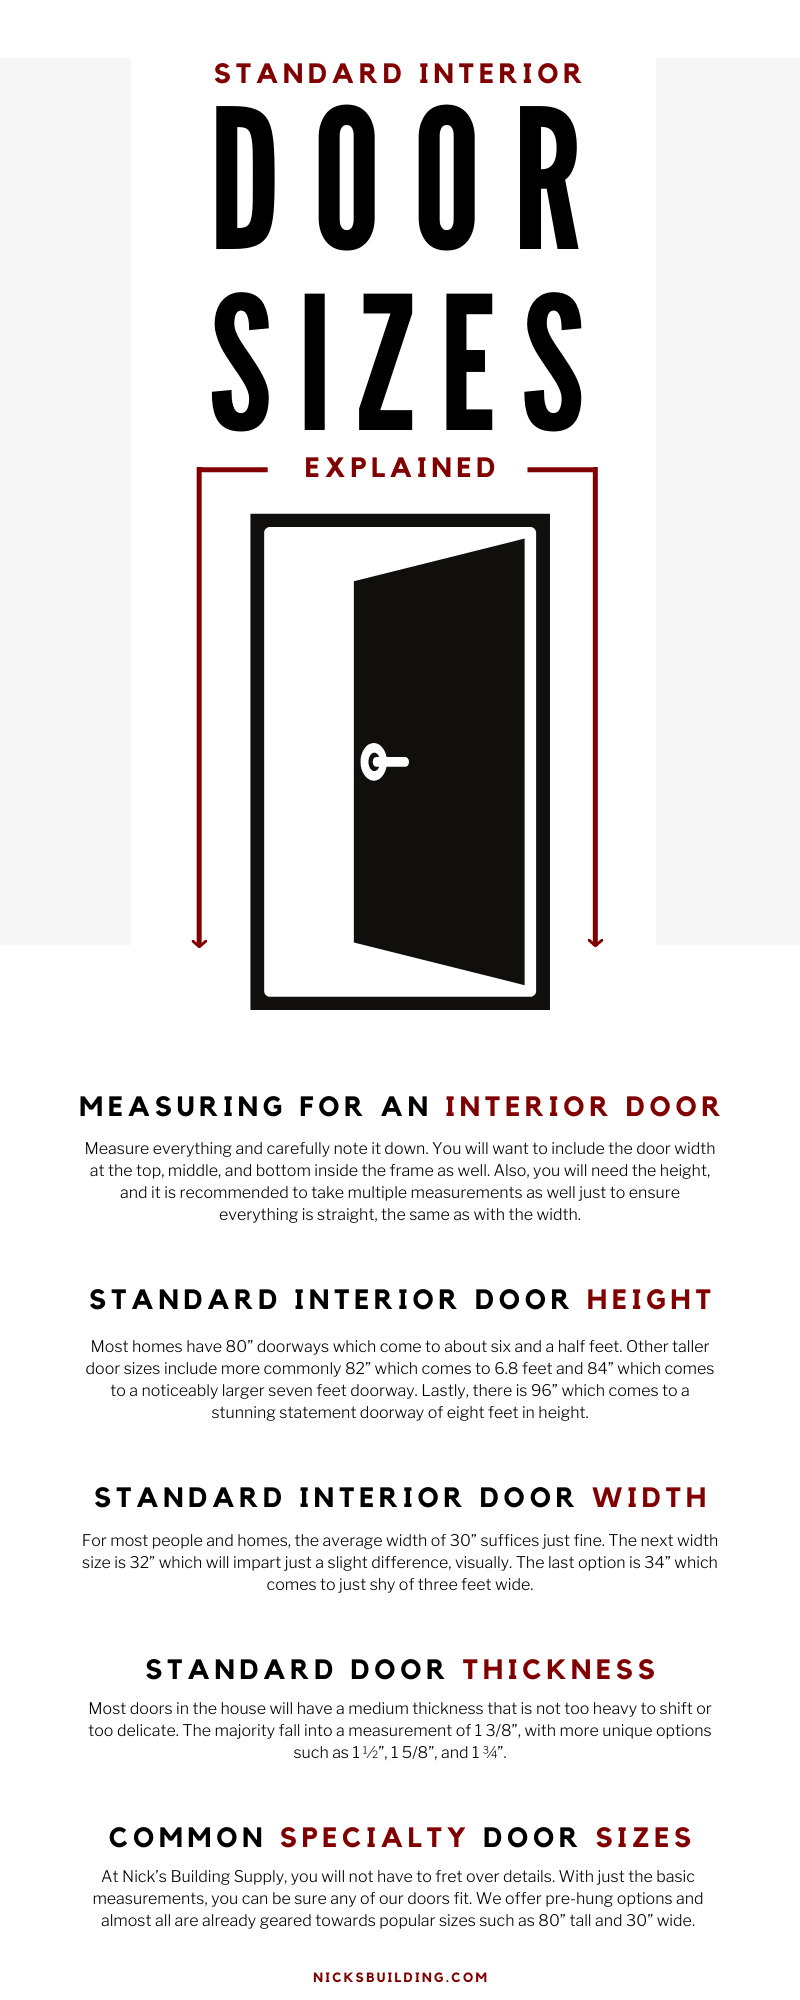 Standard Interior Door Sizes Explained